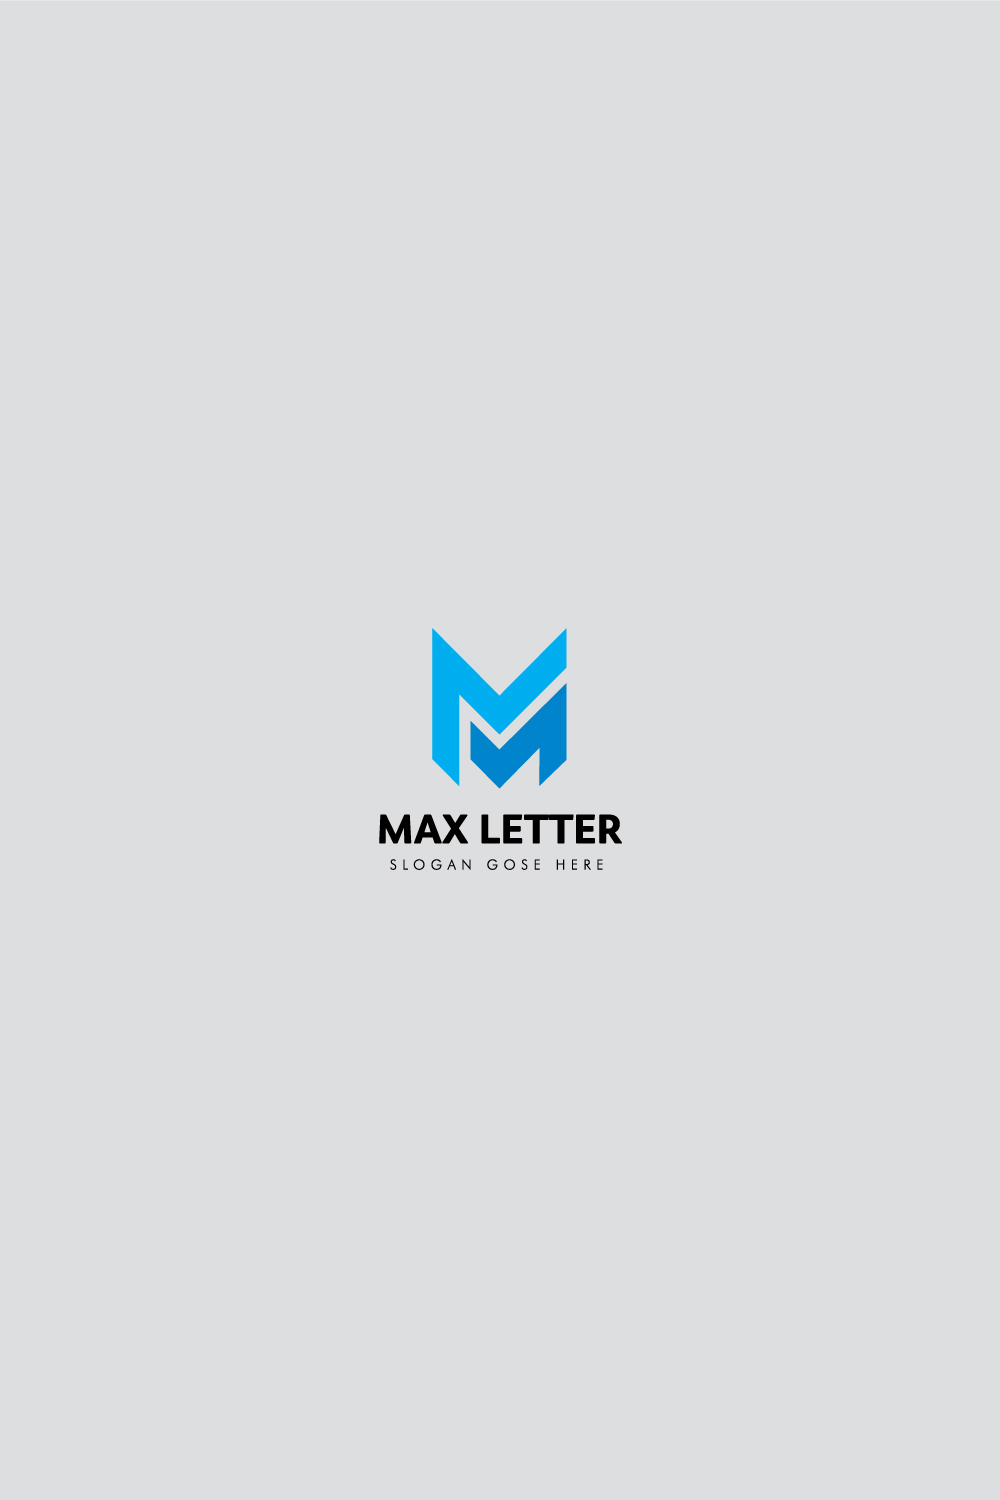 Max Letter Logo pinterest preview image.